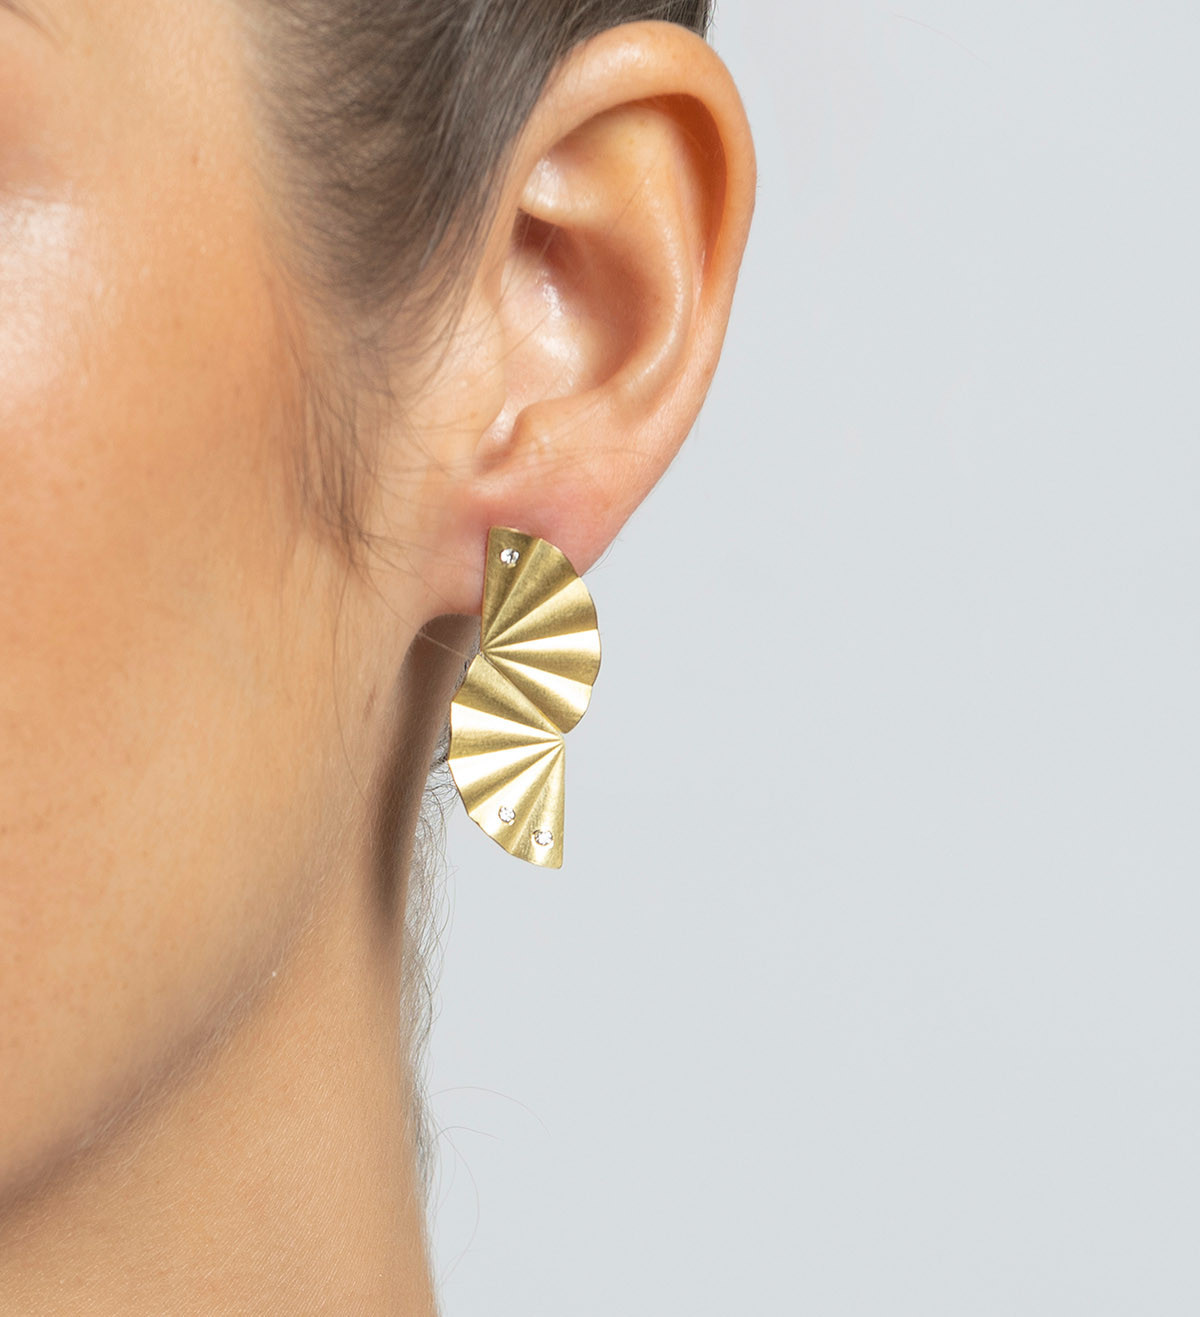 18k gold earrings Maiko with diamonds 0,09ct